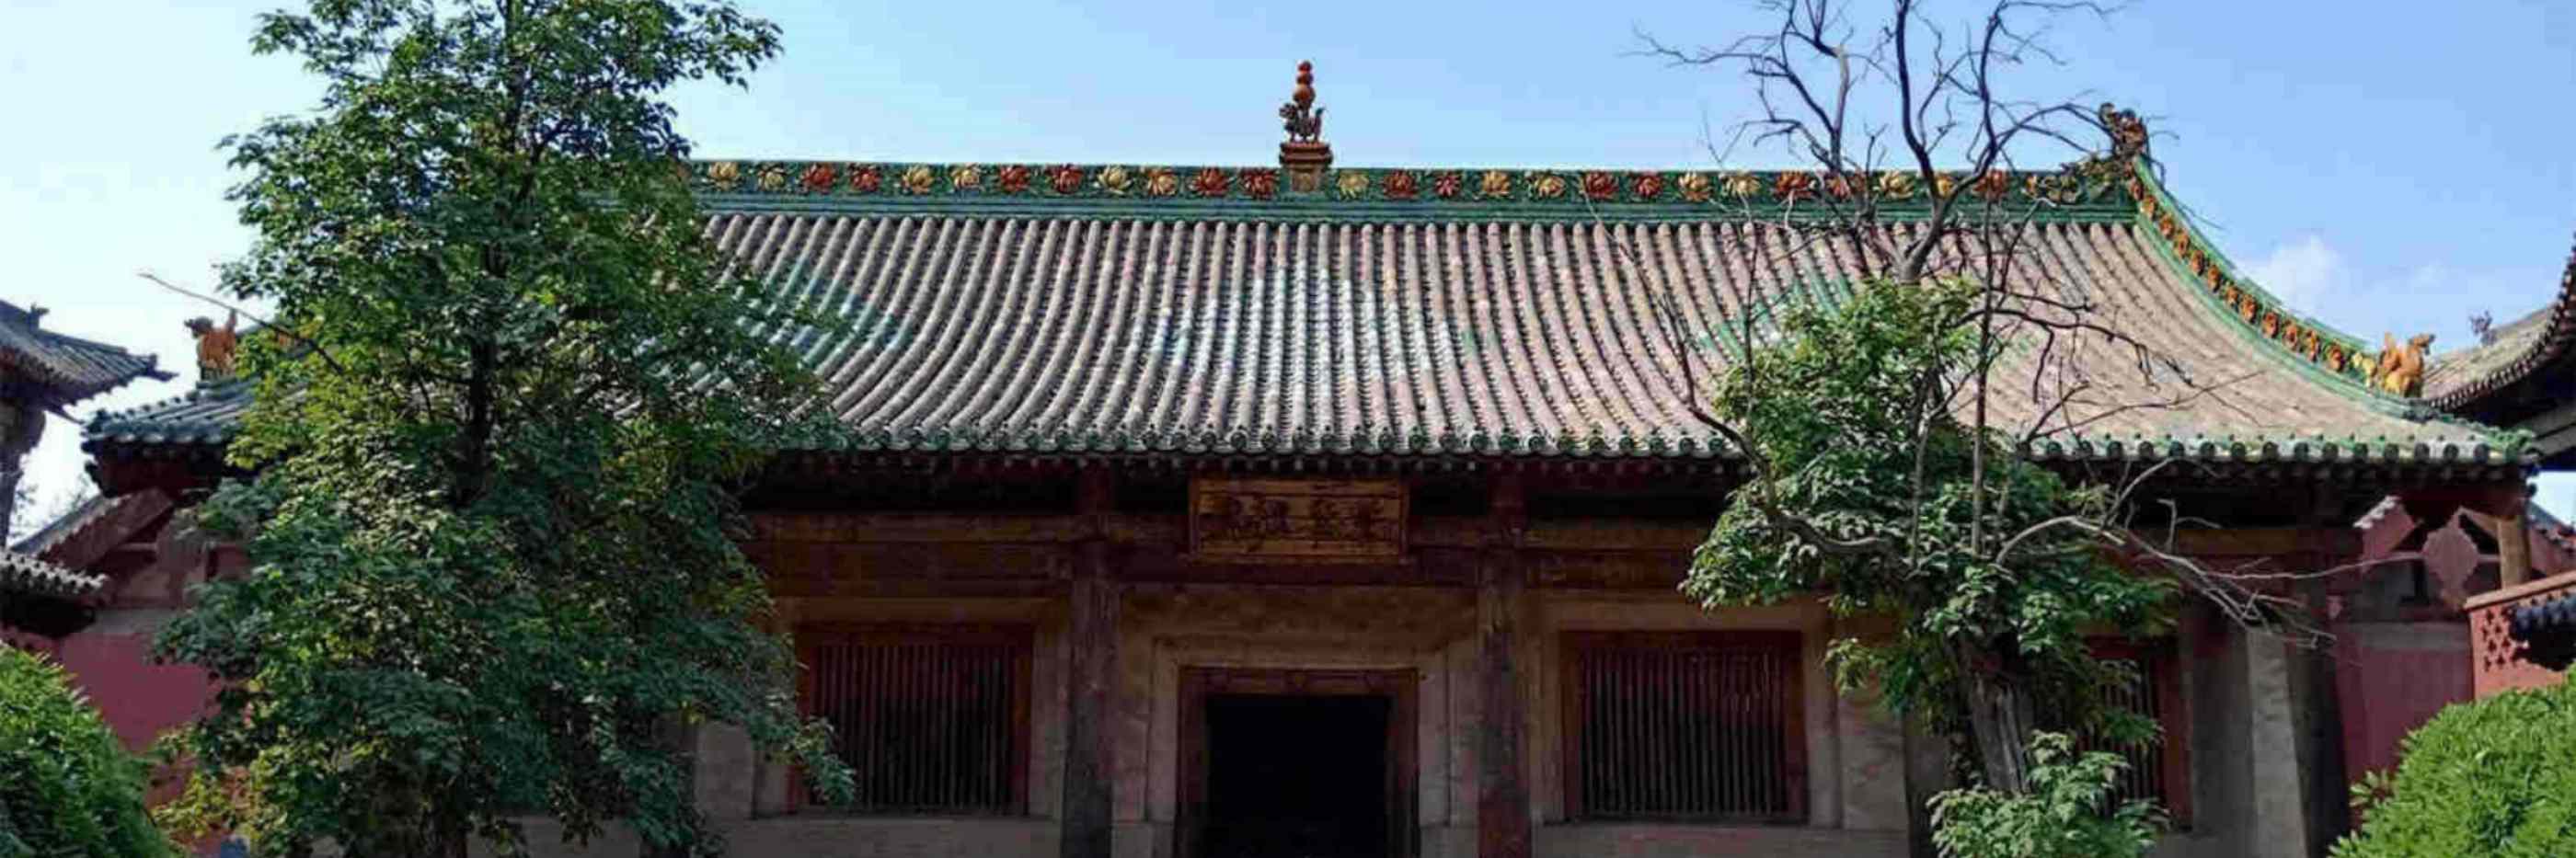 Shuanglin Temple Tour